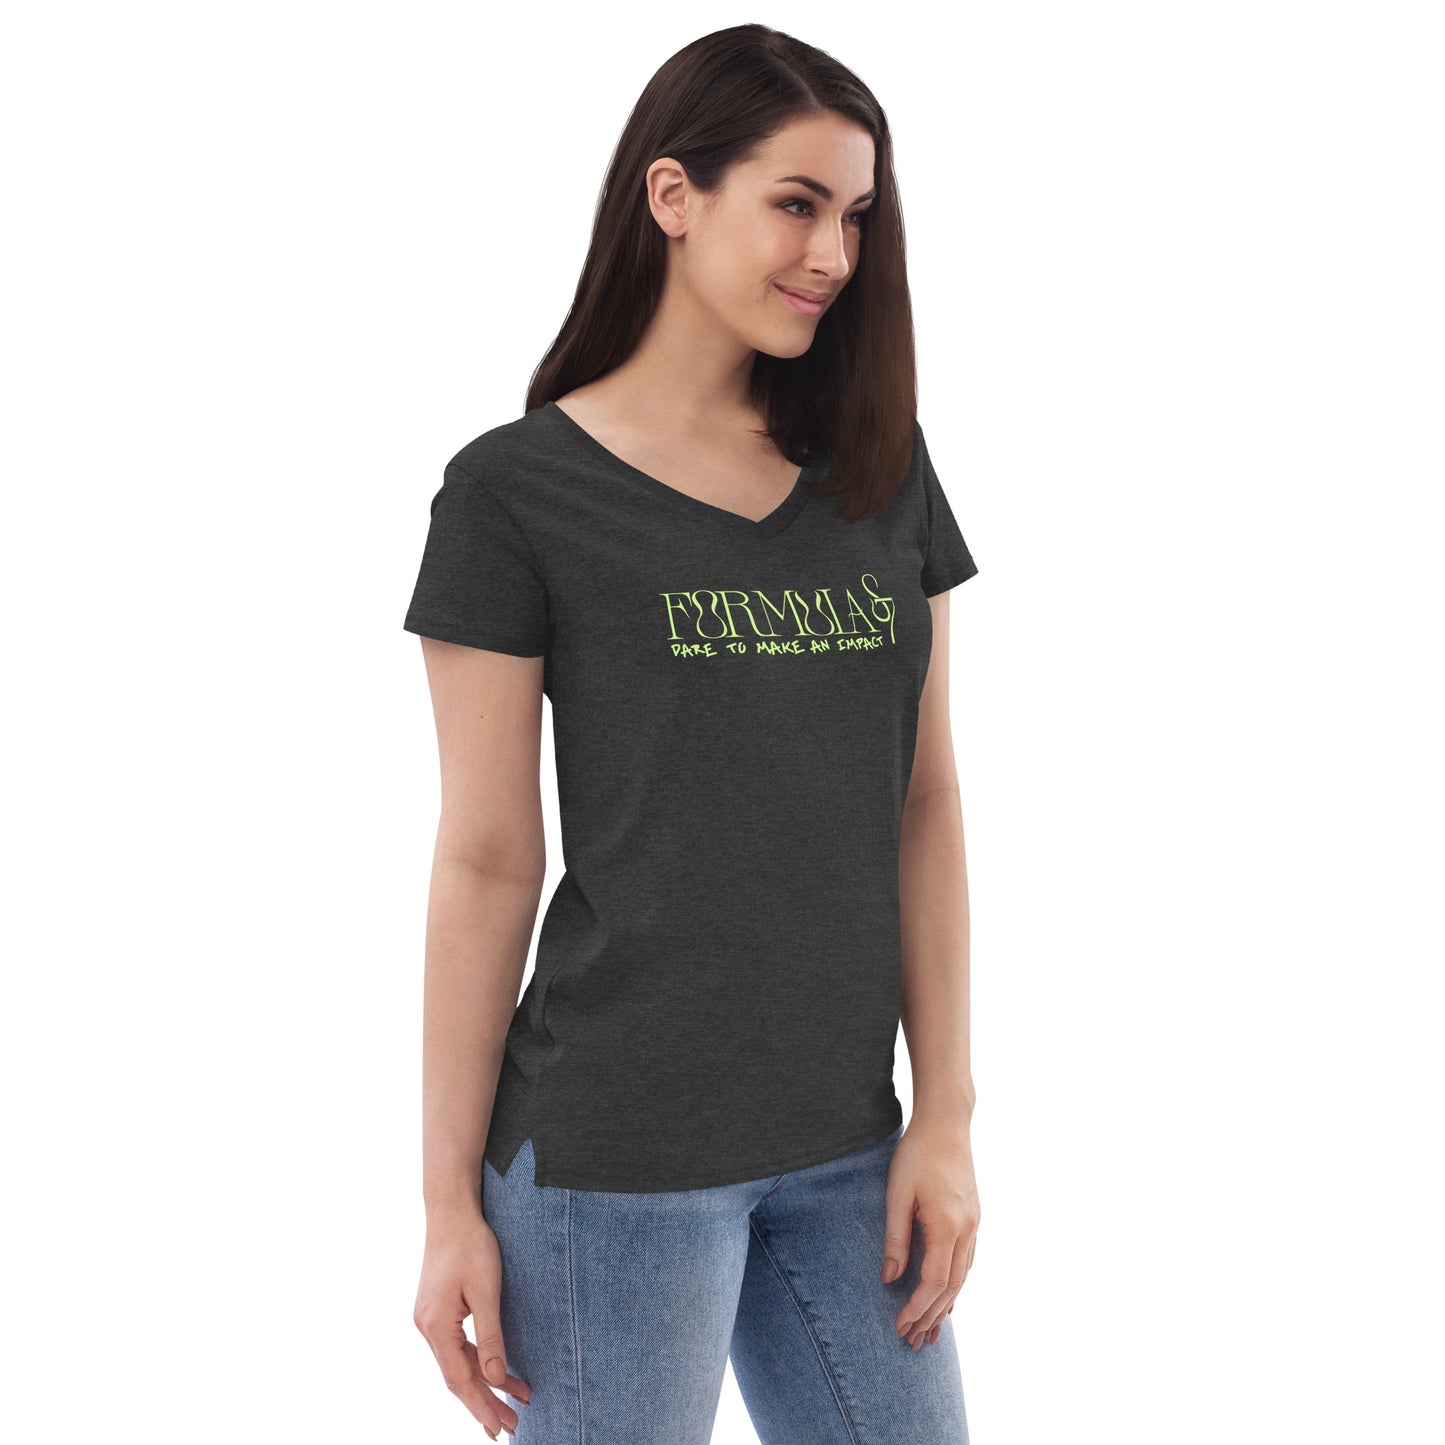 Women’s Recycled V-Neck Formula S7 Logo Print T-Shirt